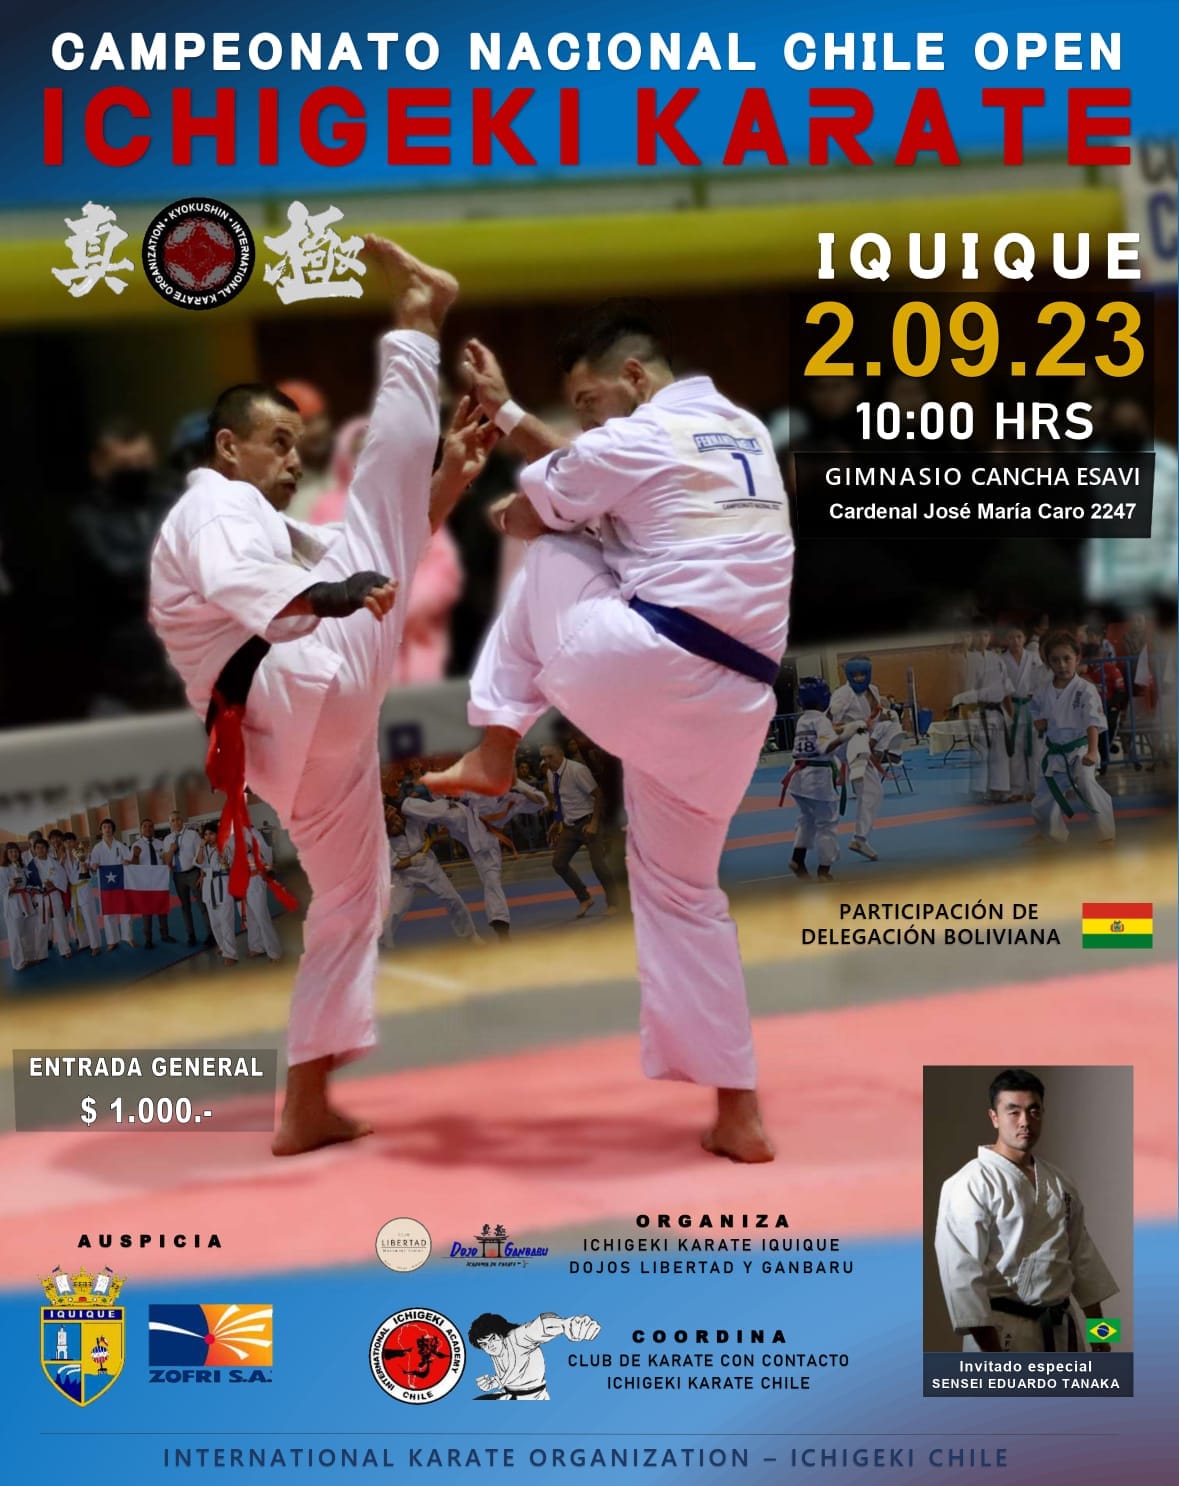 Campeonato Nacional Chile Open Ichigeki Karate Iquique